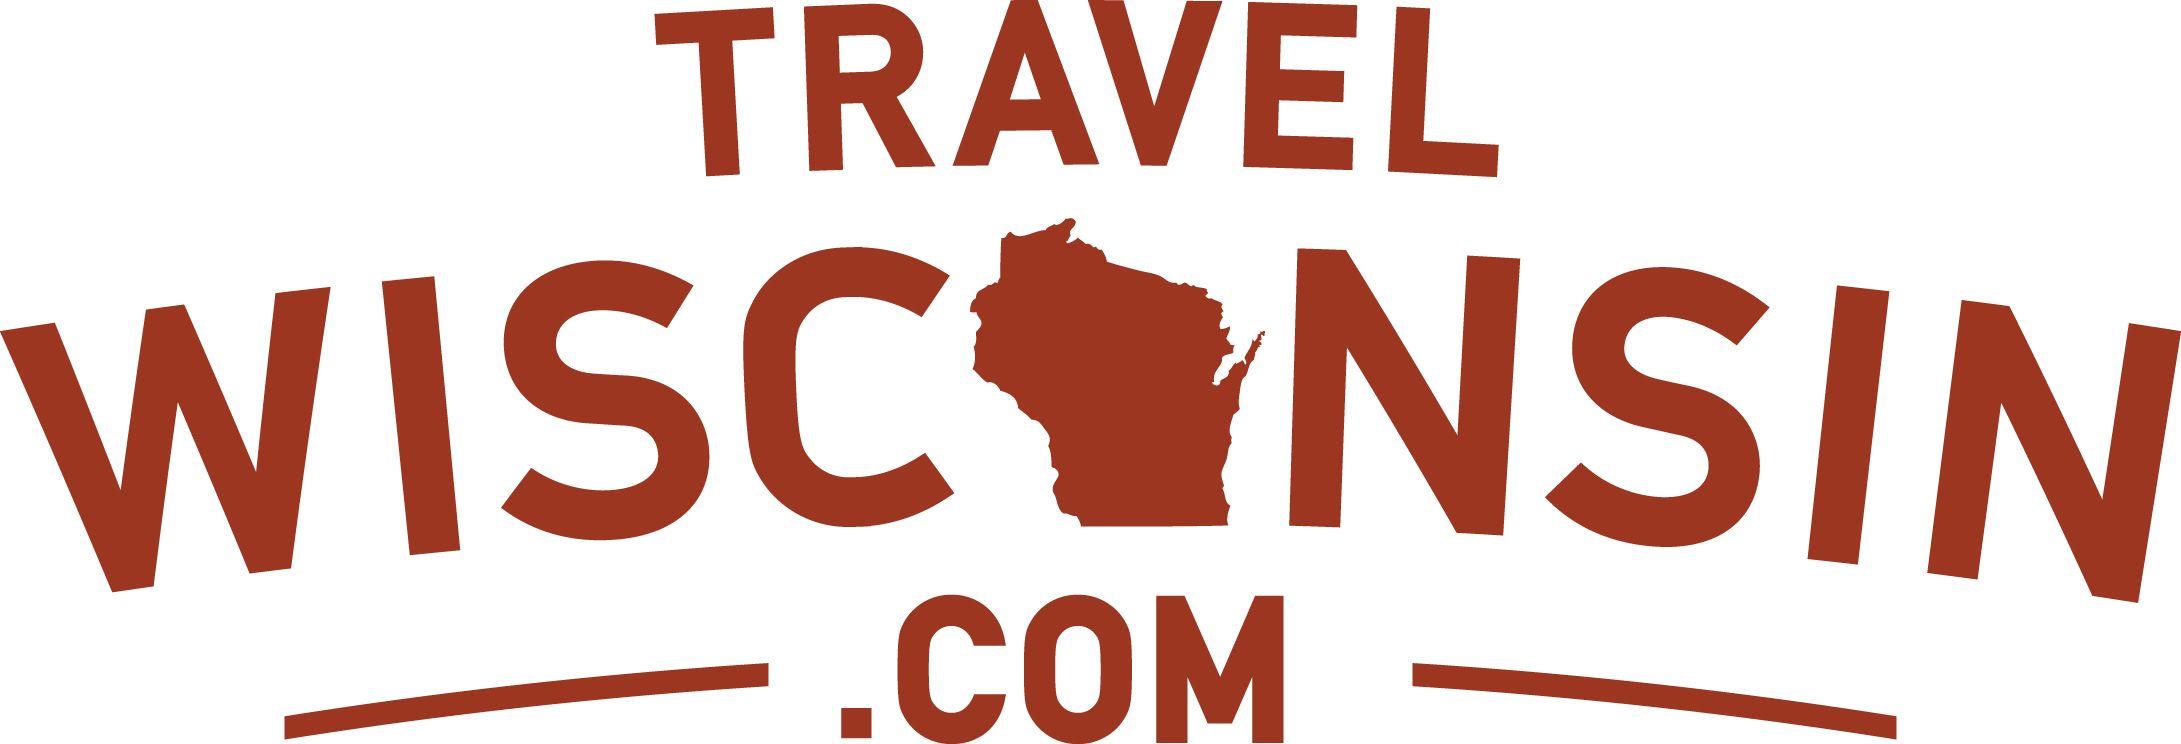 Wisconsin Logo - Travel Wisconsin Logo Files